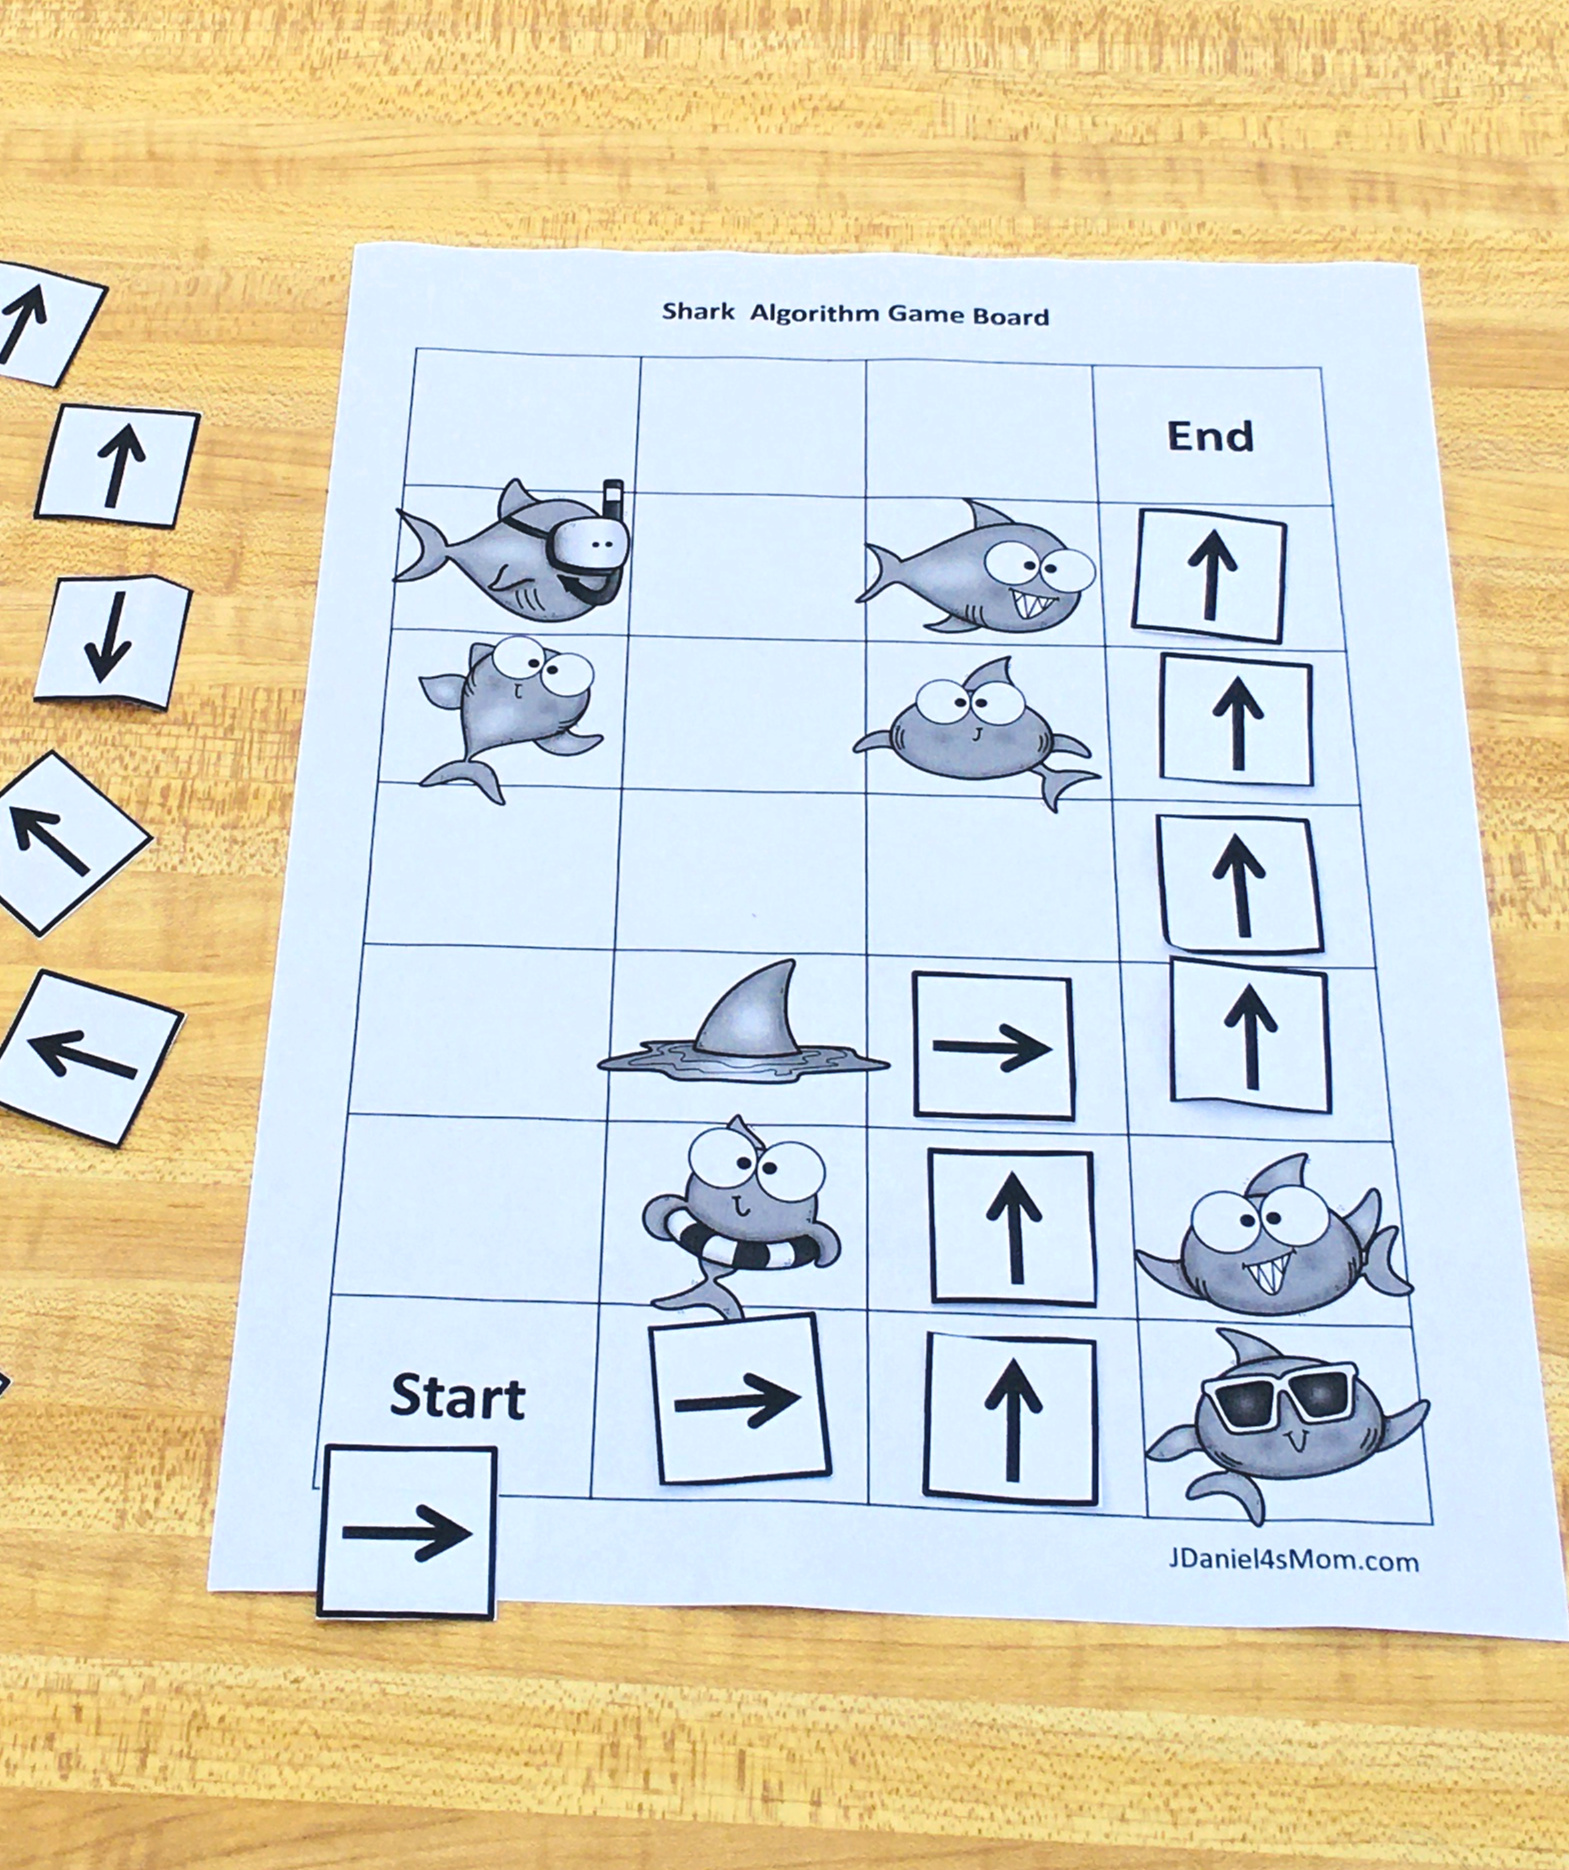 Shark Algorithm Game Board 